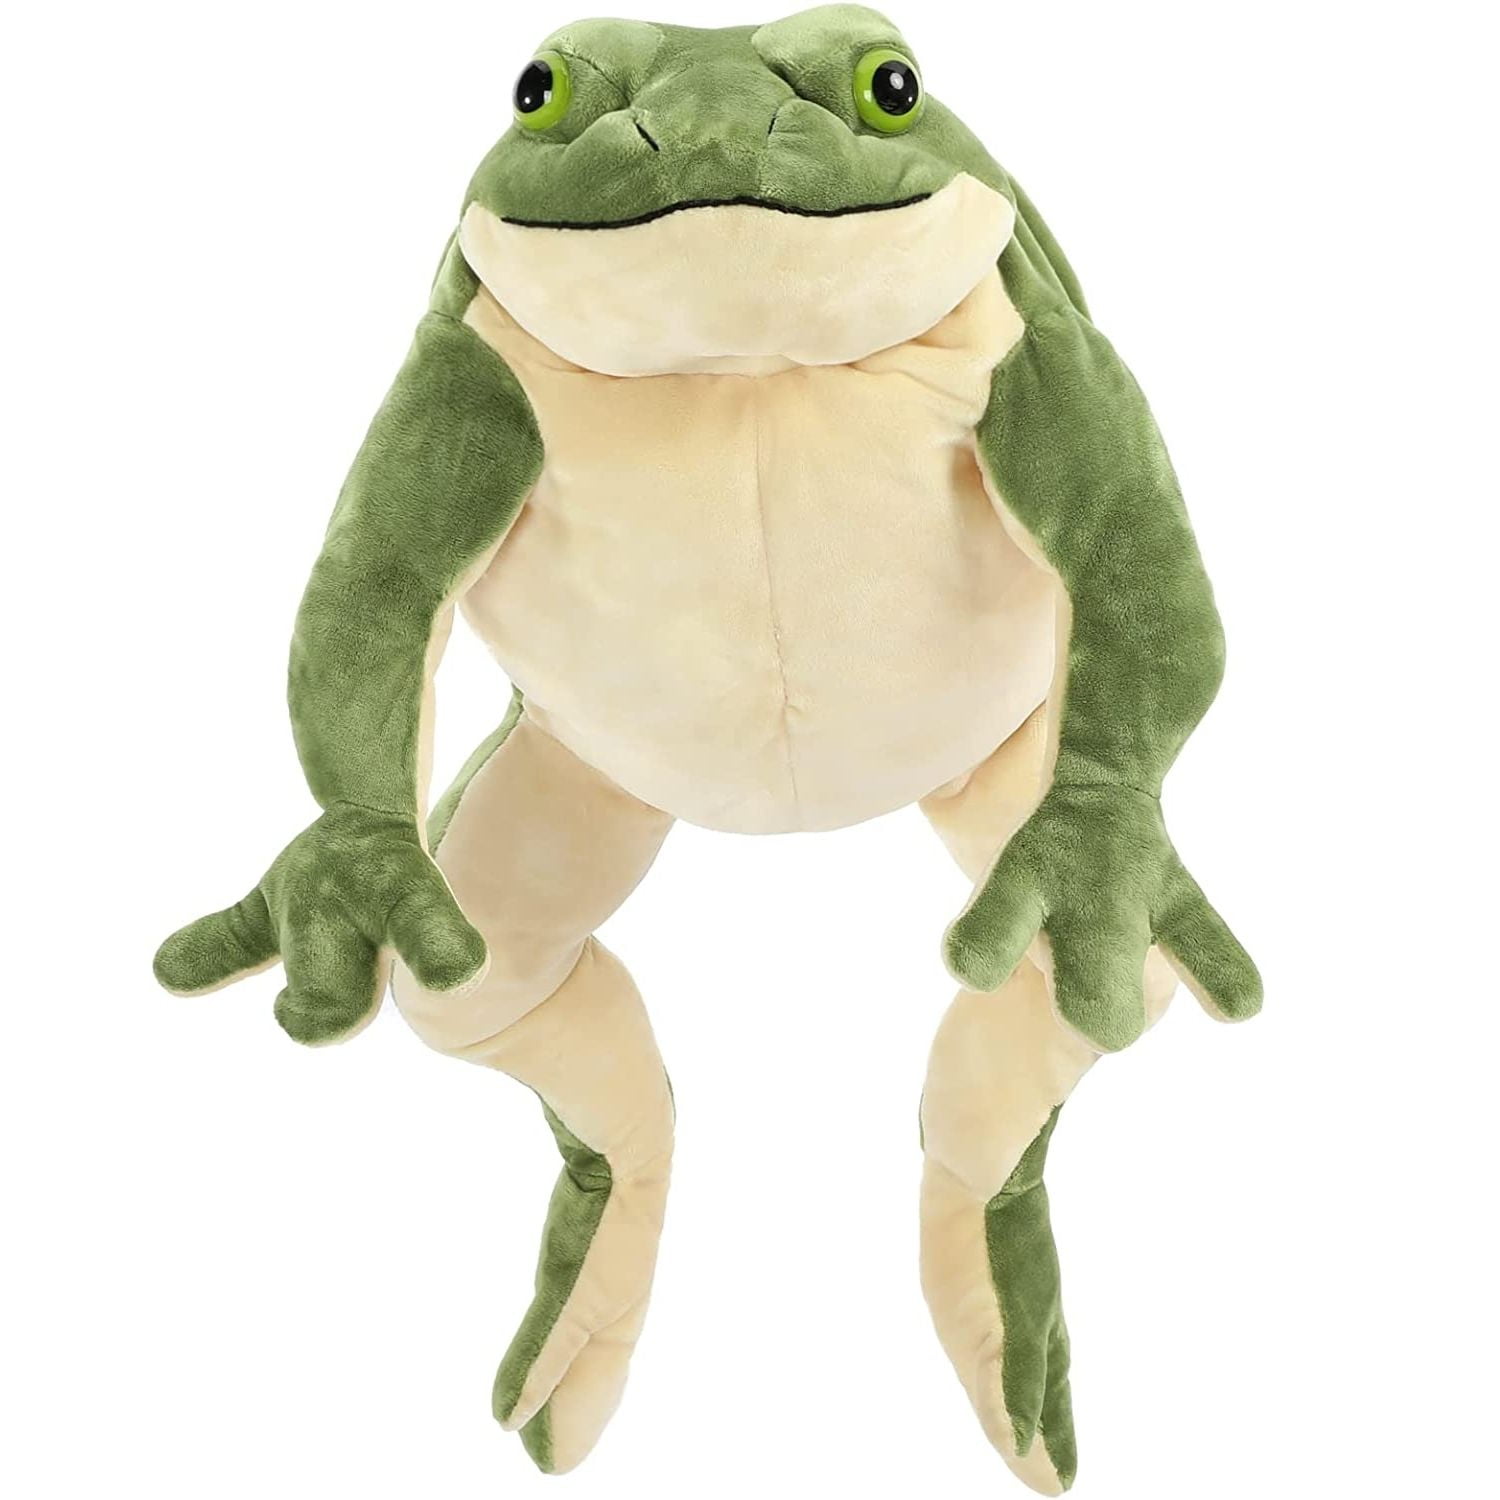 MaoGoLan 22 Giant Frog Stuffed Animal Large Green Frog Plush Toy